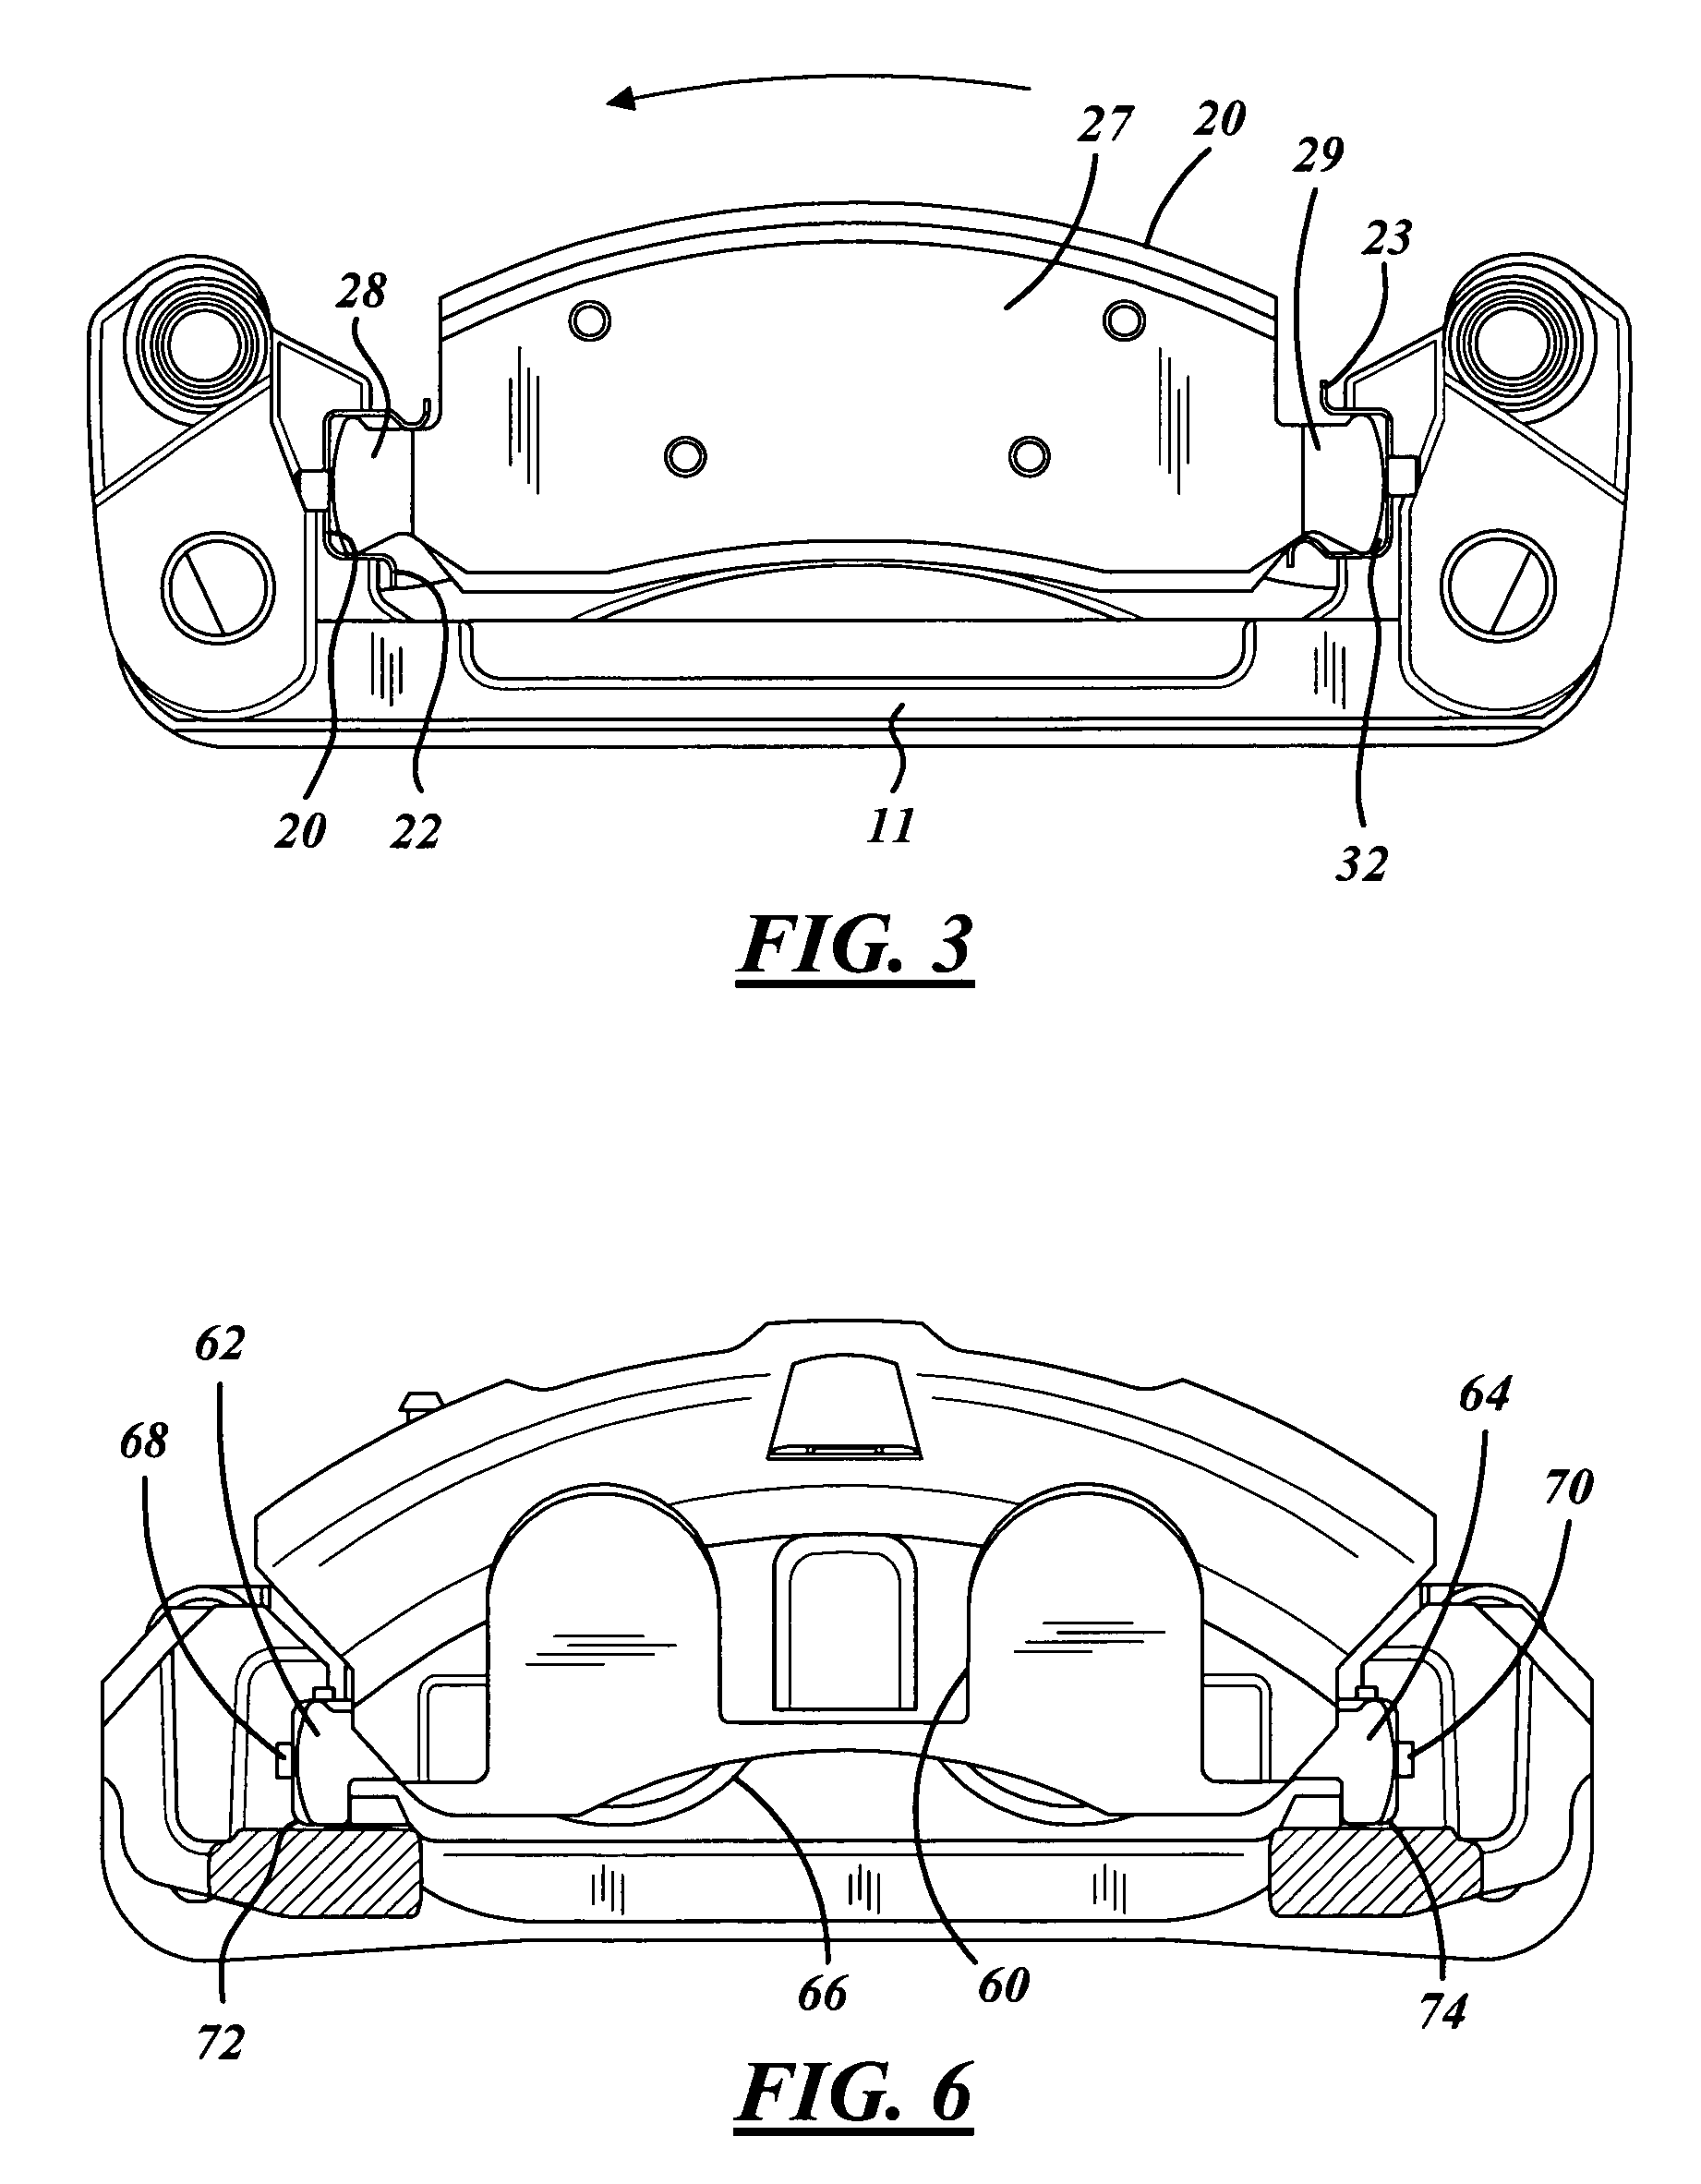 Defined brake pad abutment